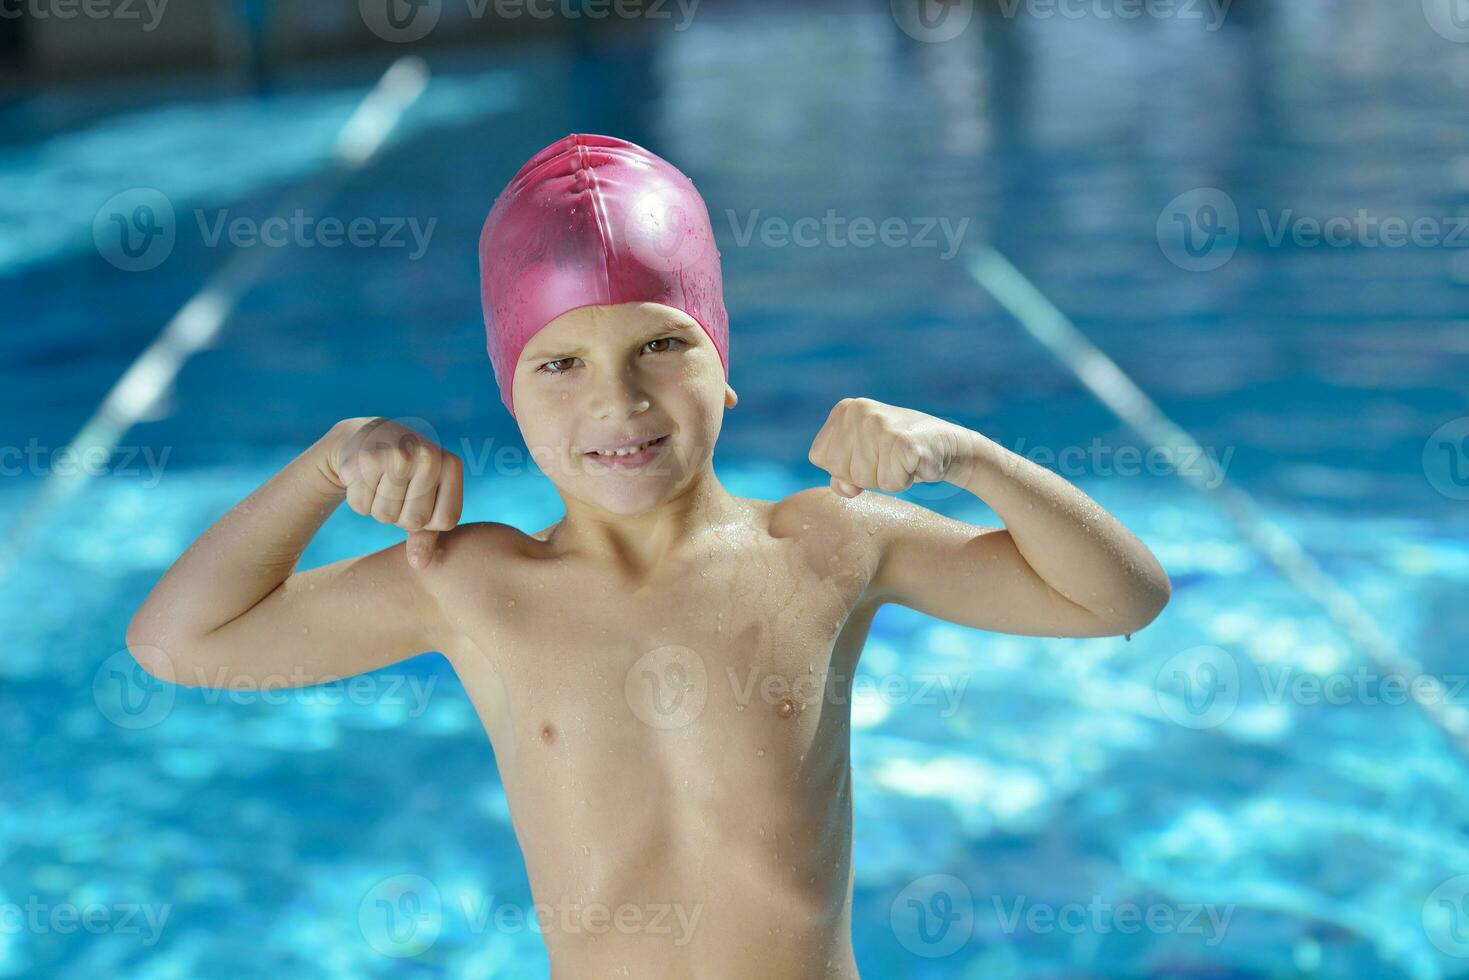 criança feliz na piscina foto